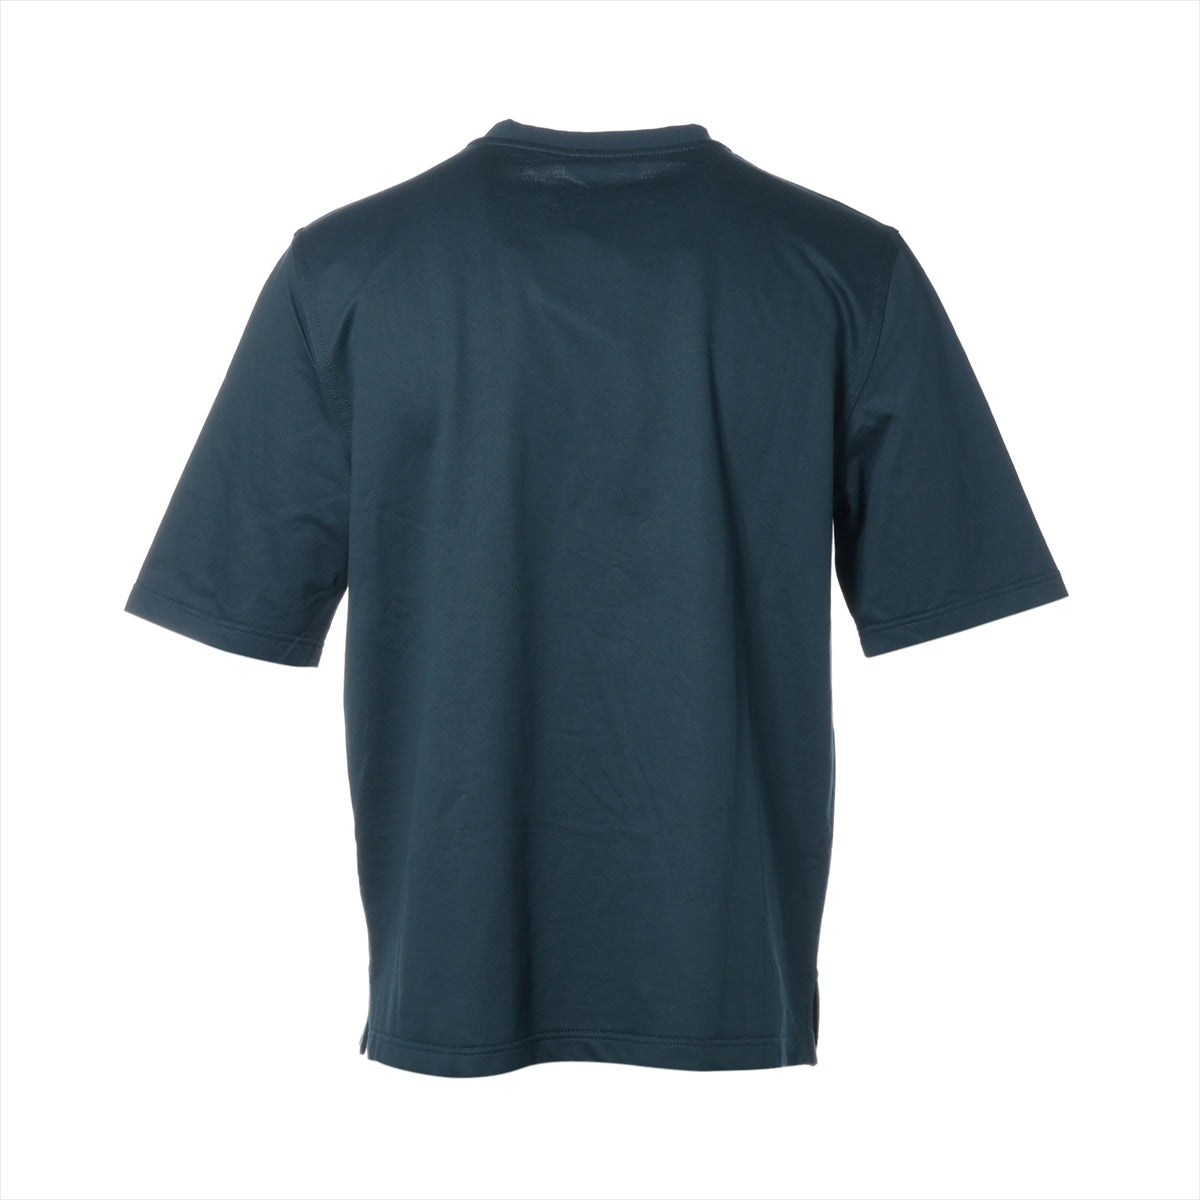 Hermès Cotton T-shirt S Men's Green  mini leather patch